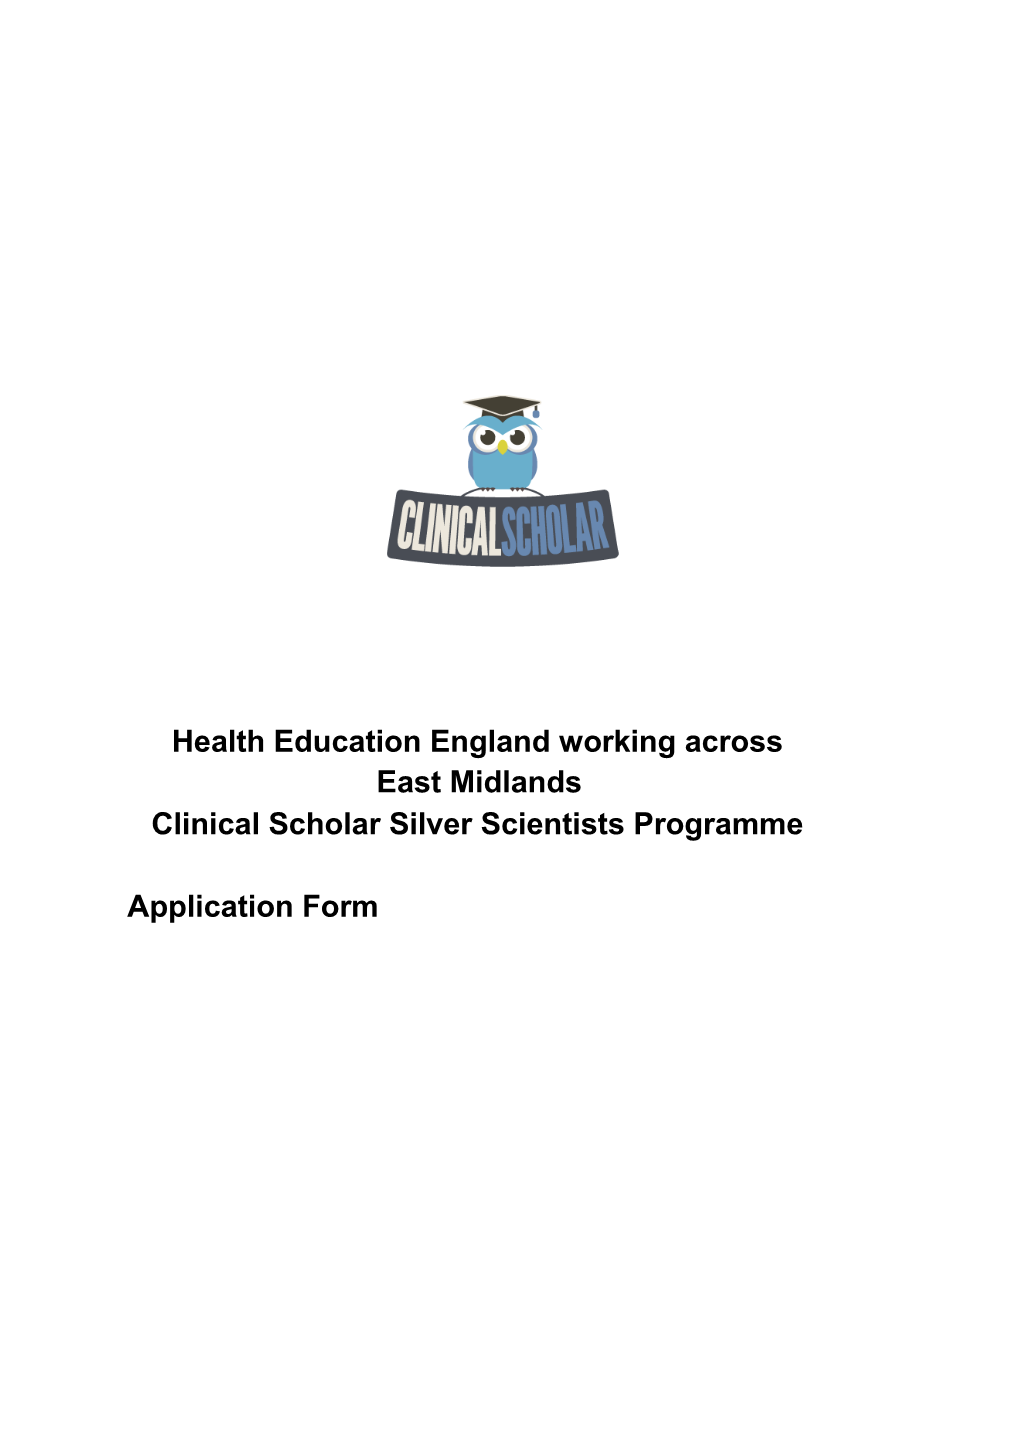 Health Education England Working Across East Midlands